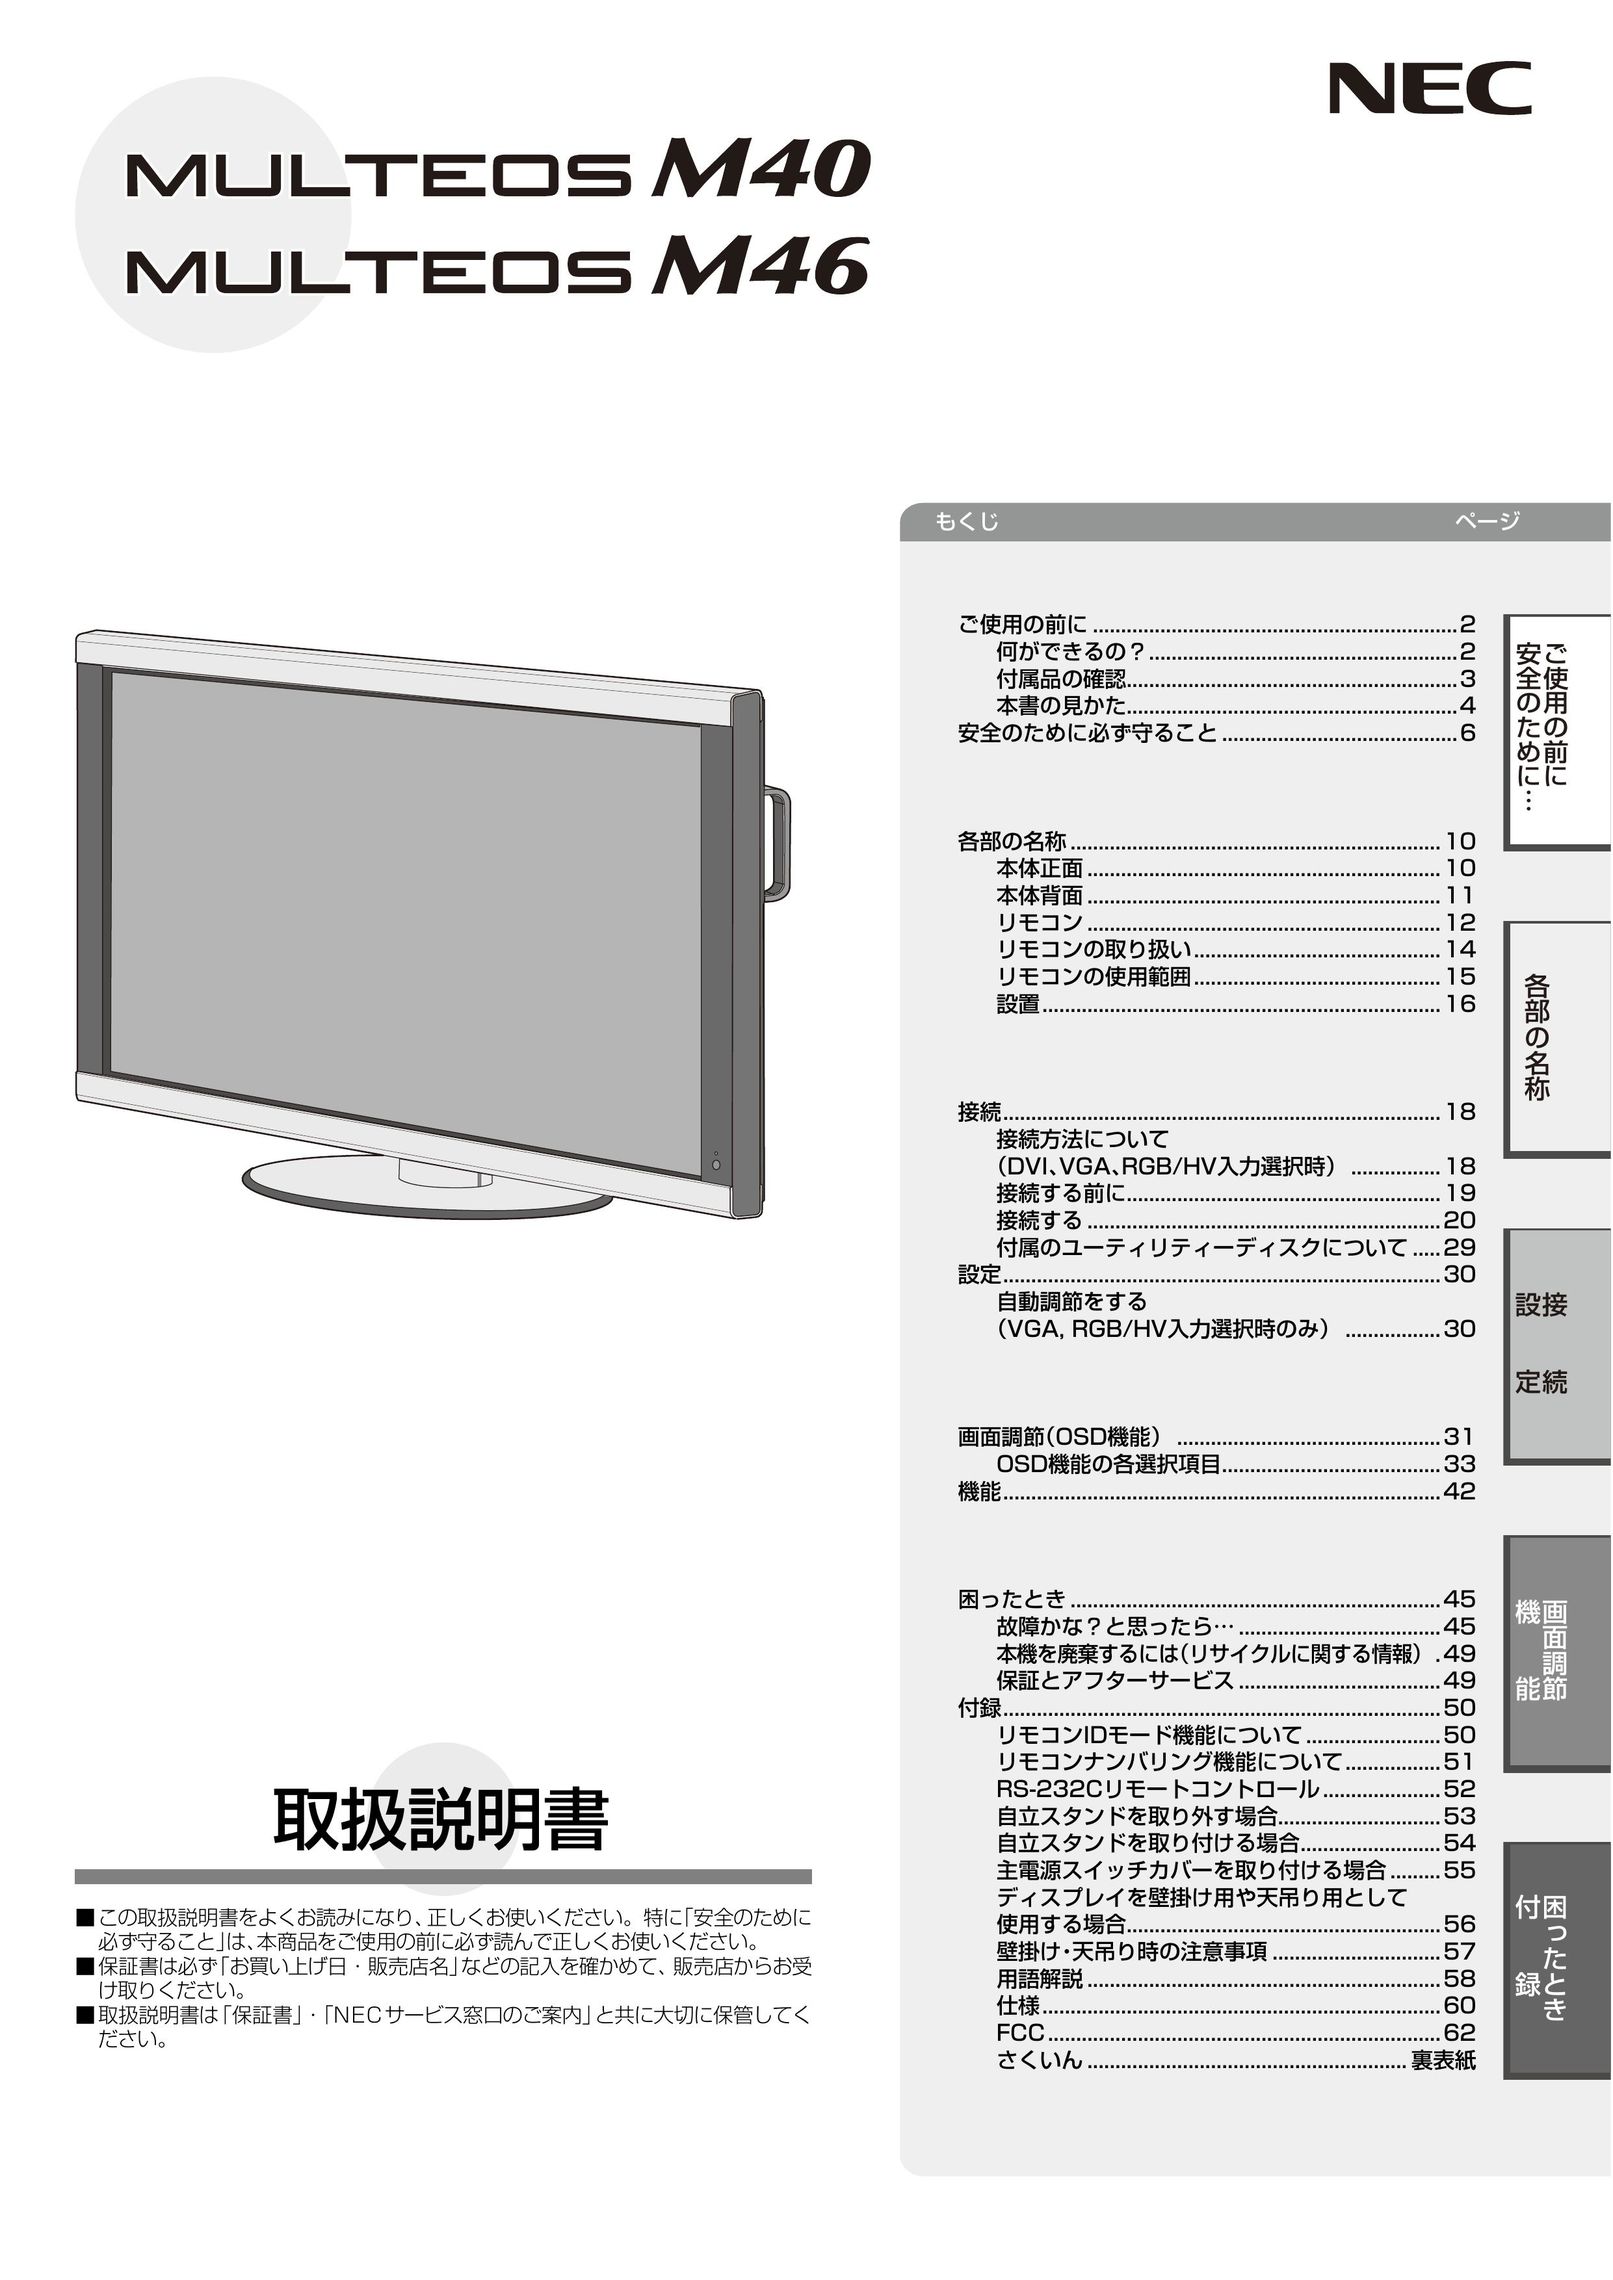 NEC M46 Car Satellite TV System User Manual